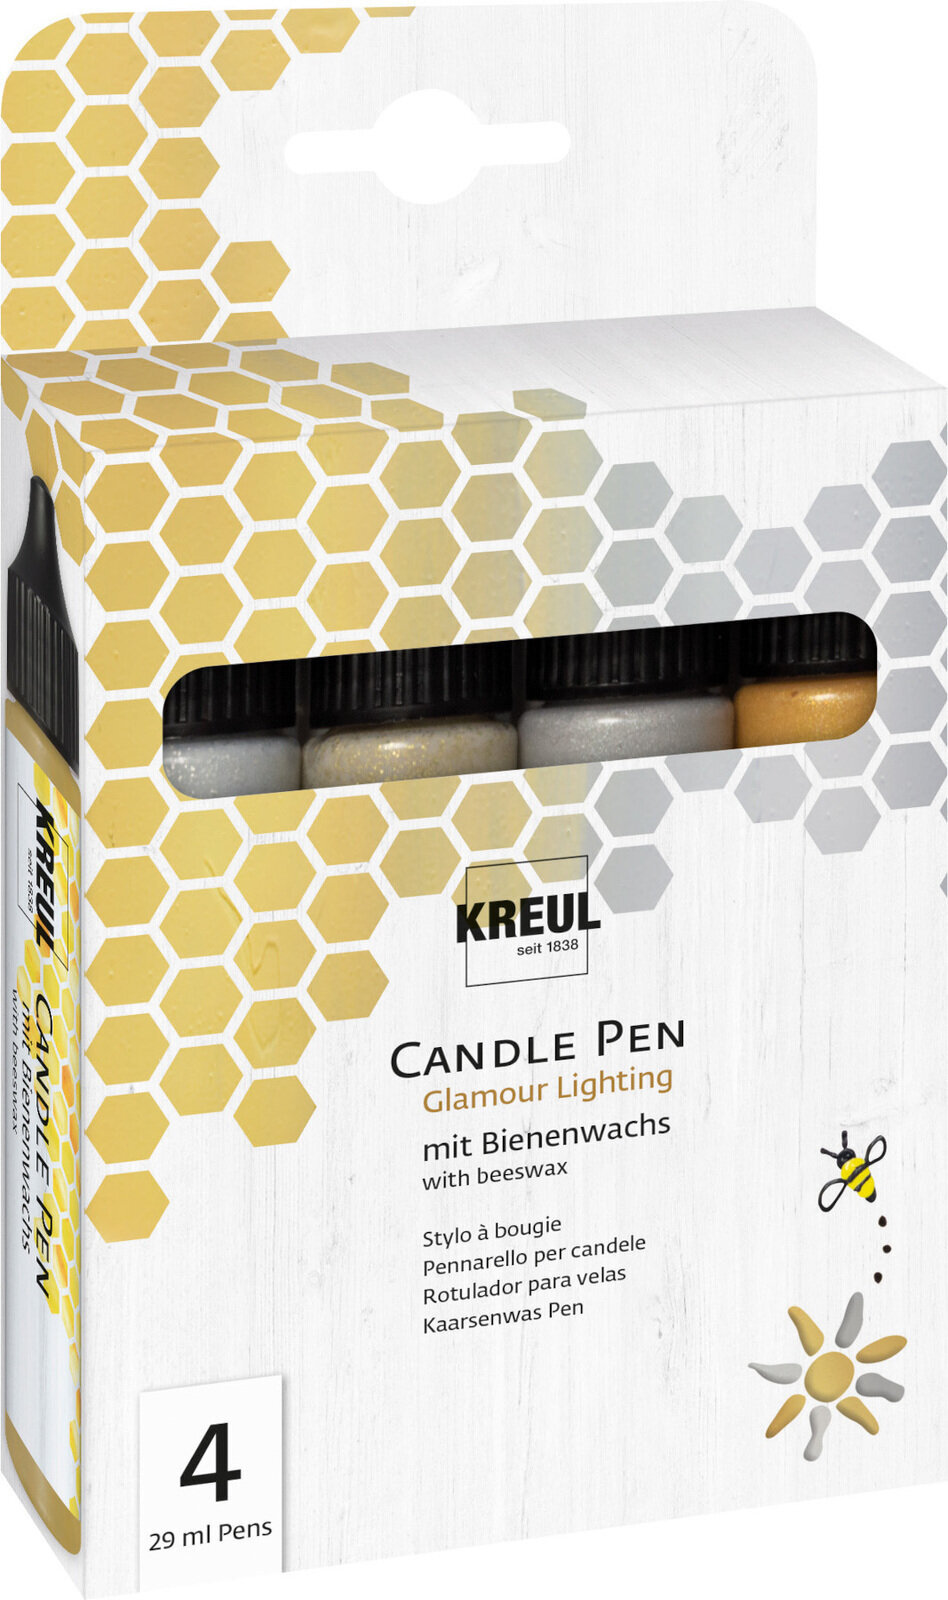 Flomaster Kreul Candle Pen Glamour Lighting Set